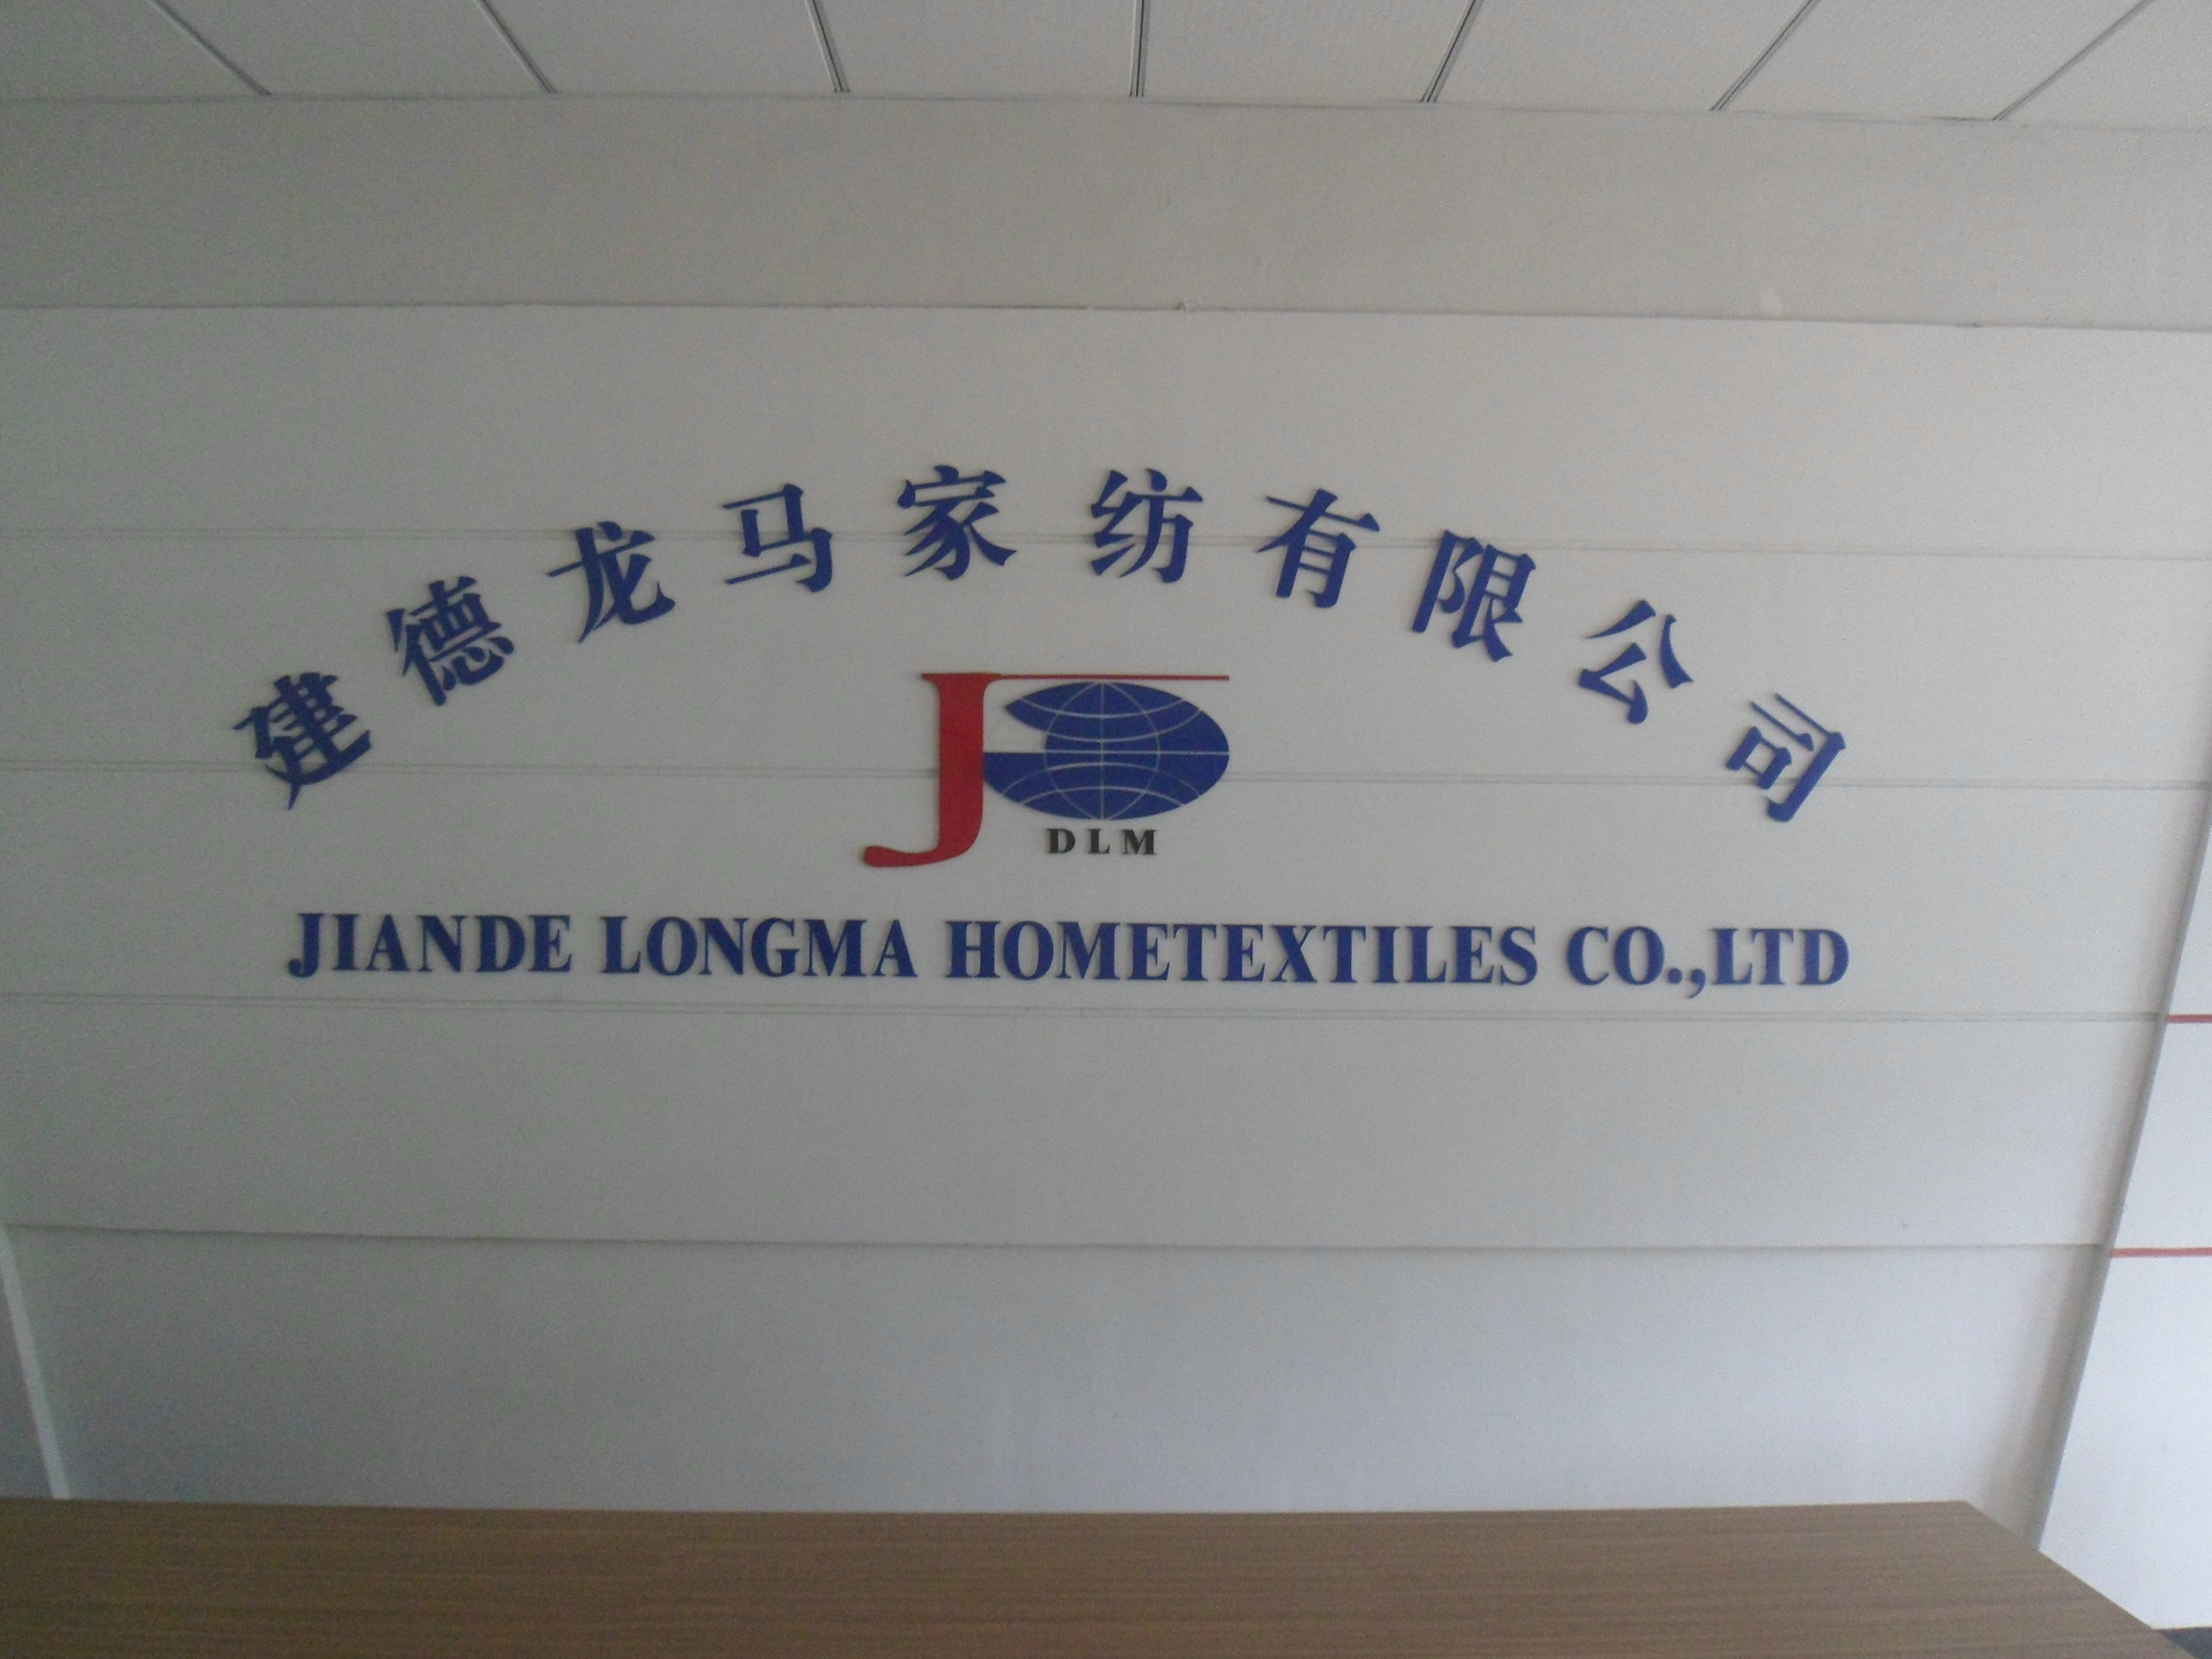 JIANDE LONGMA HOMETEXTILES CO.,LTD